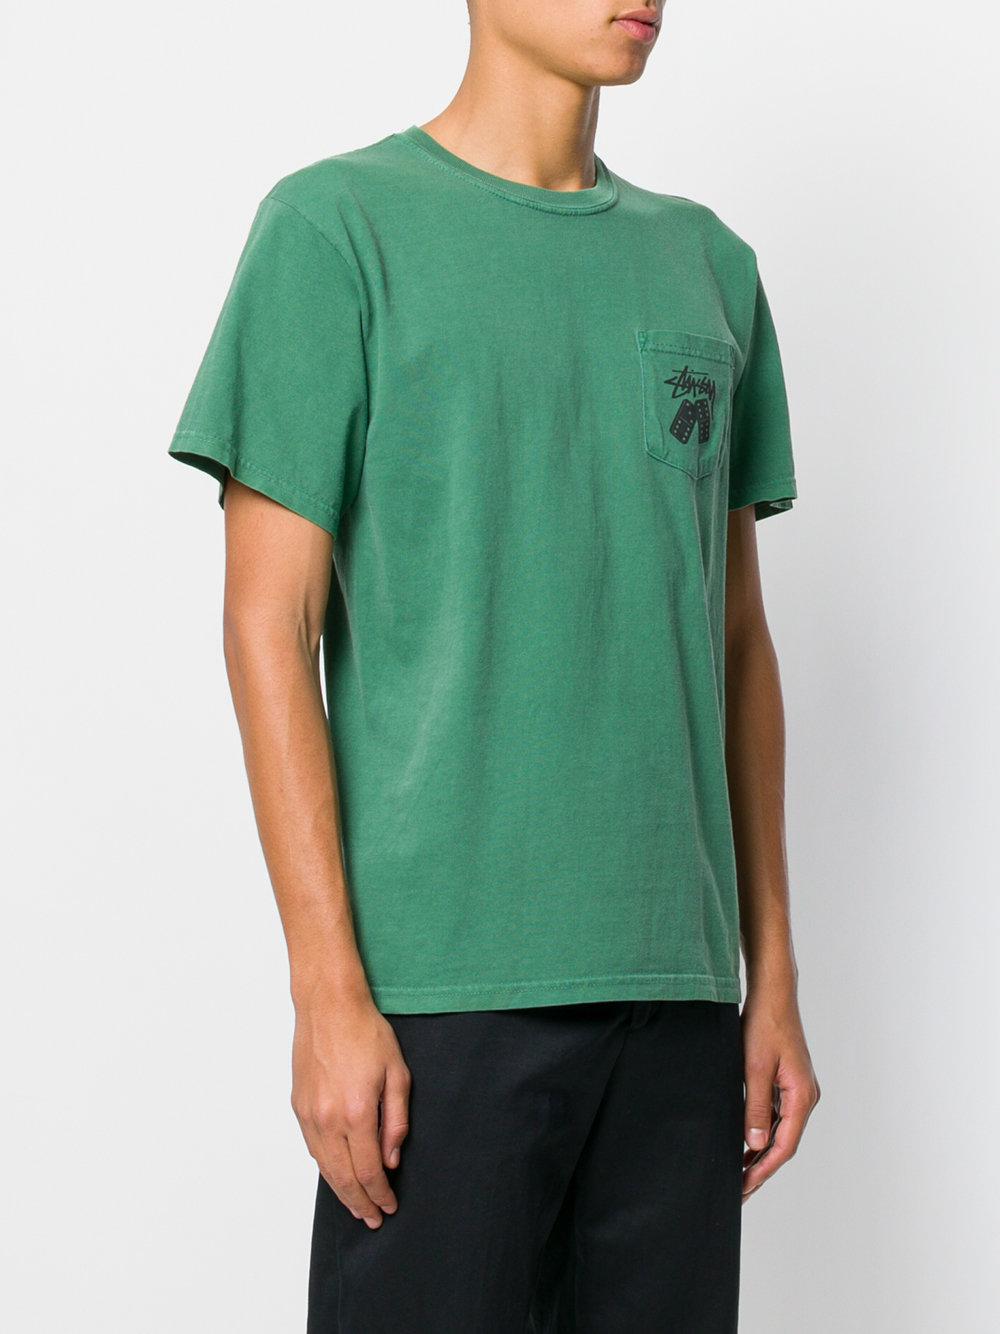 Stussy Cotton Domino Logo Print T-shirt in Green for Men - Lyst